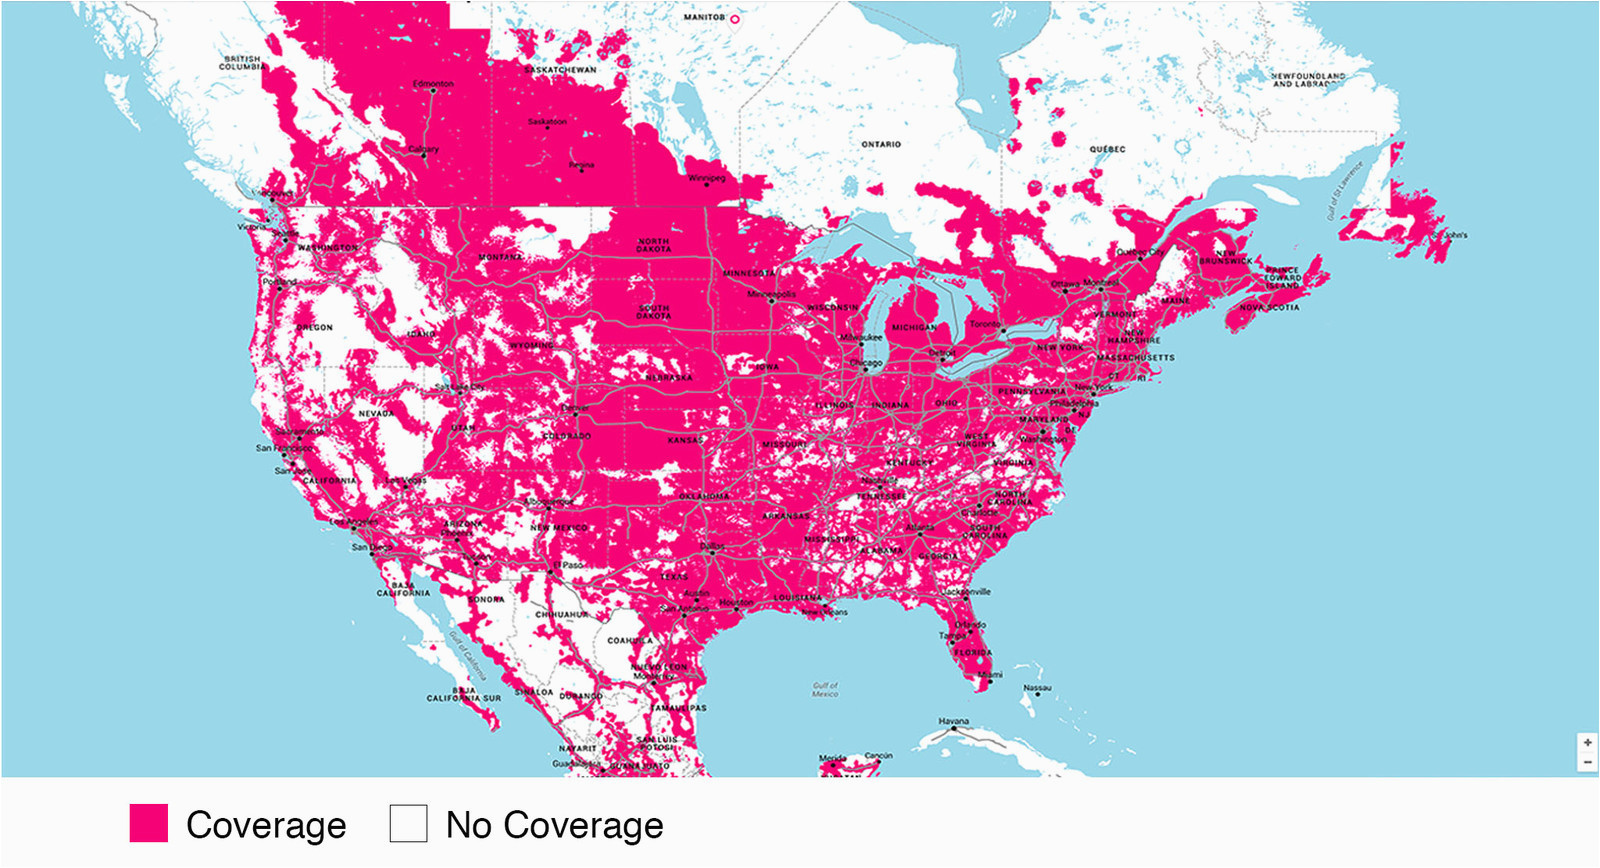 verizon cell coverage map fresh verizon wireless coverage map luxury